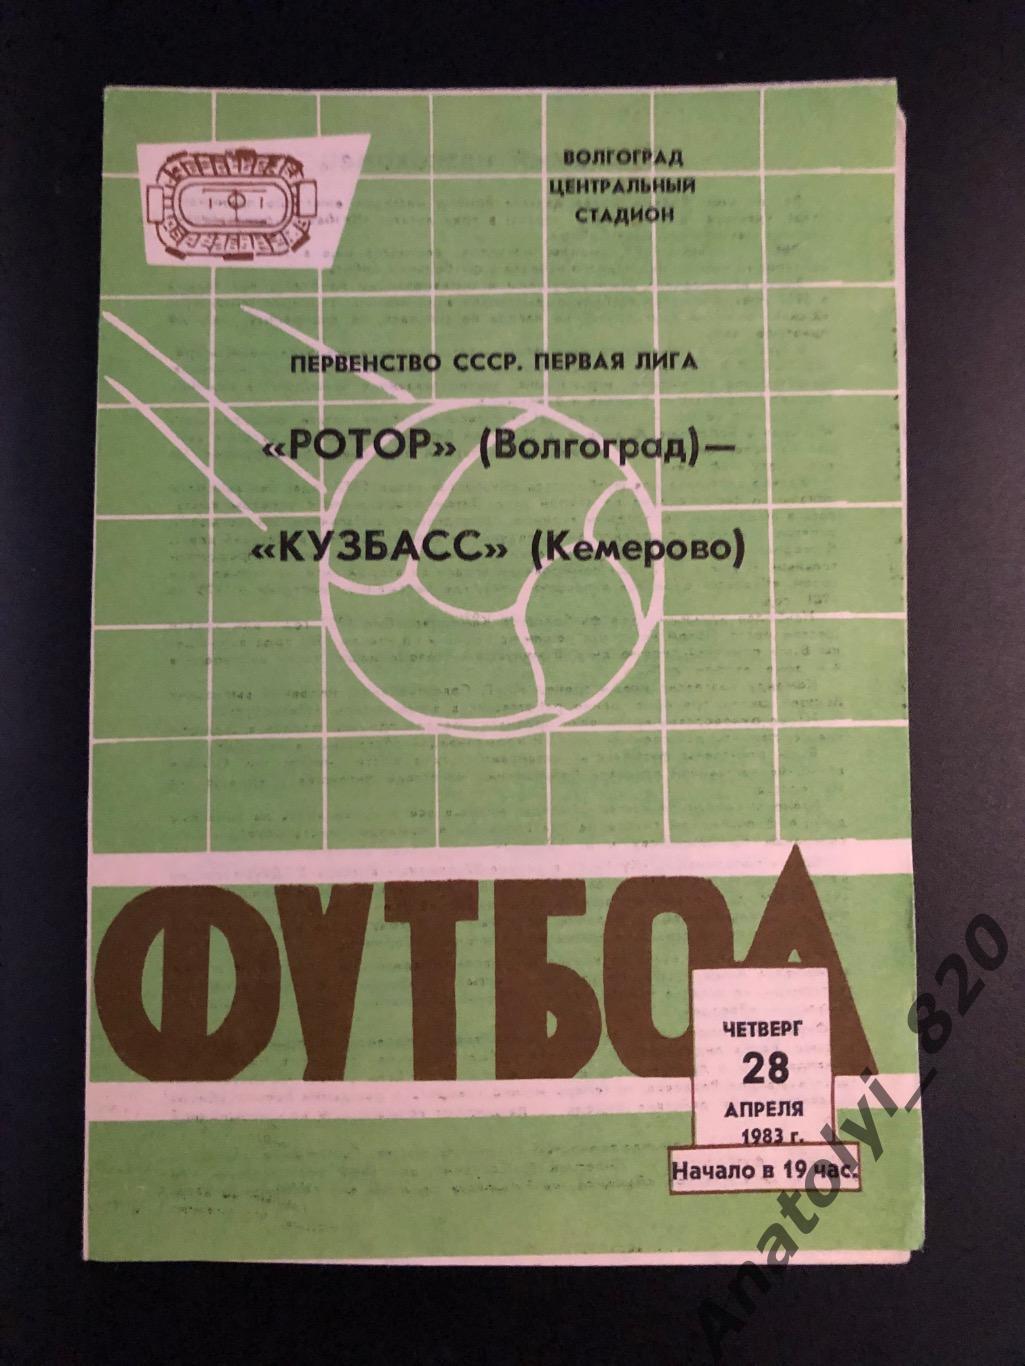 Ротор Волгоград - Кузбасс Кемерово, 28.04.1983